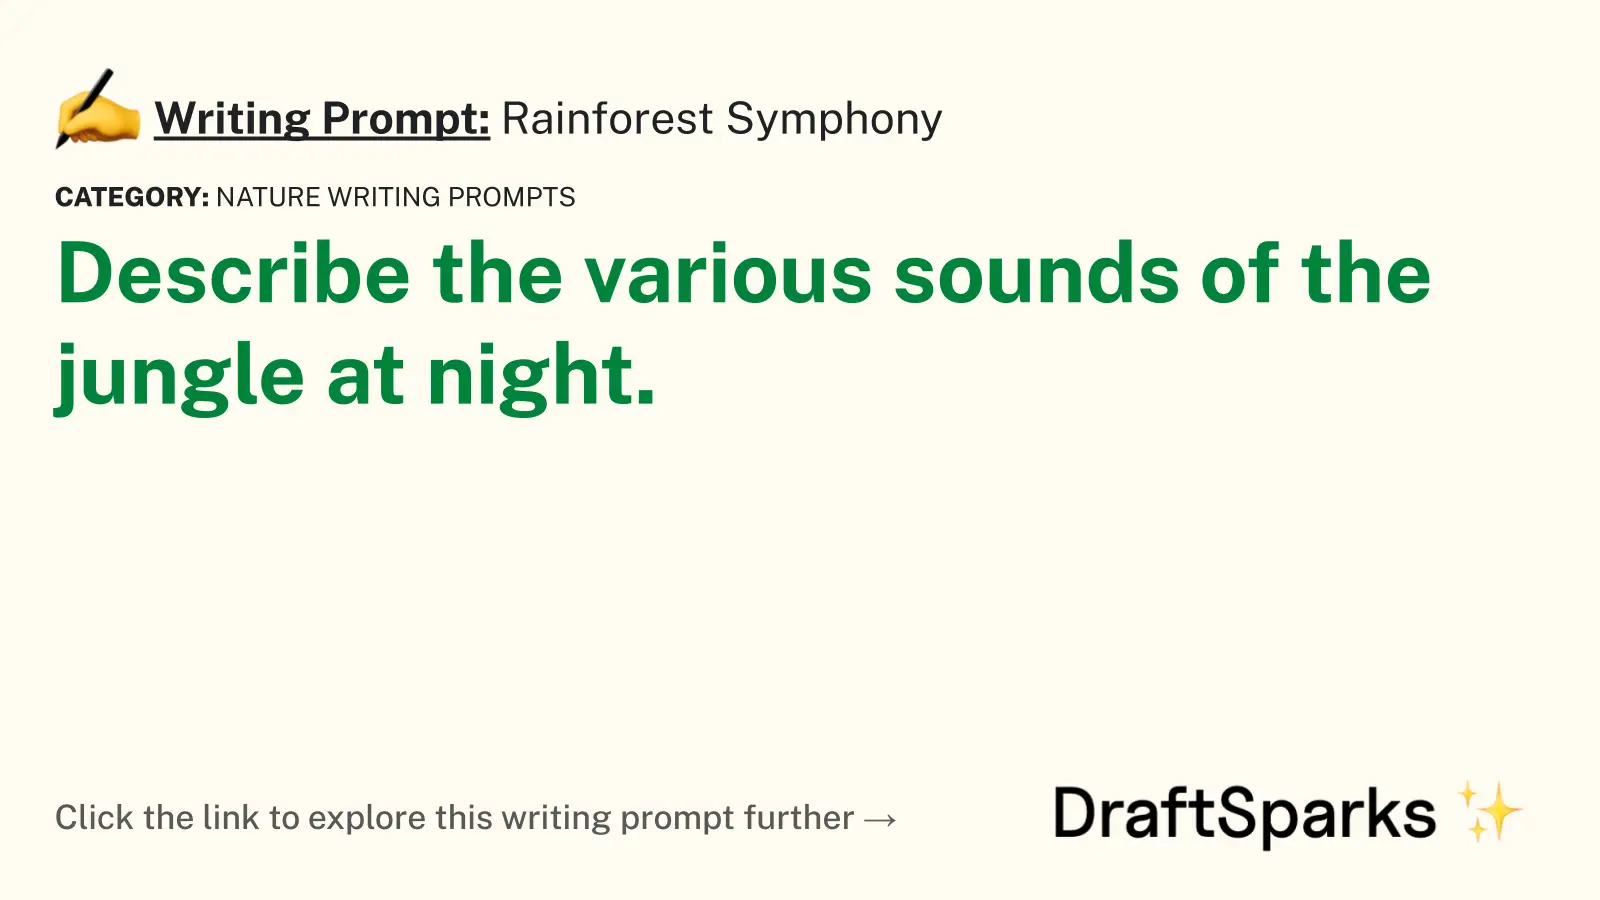 Rainforest Symphony